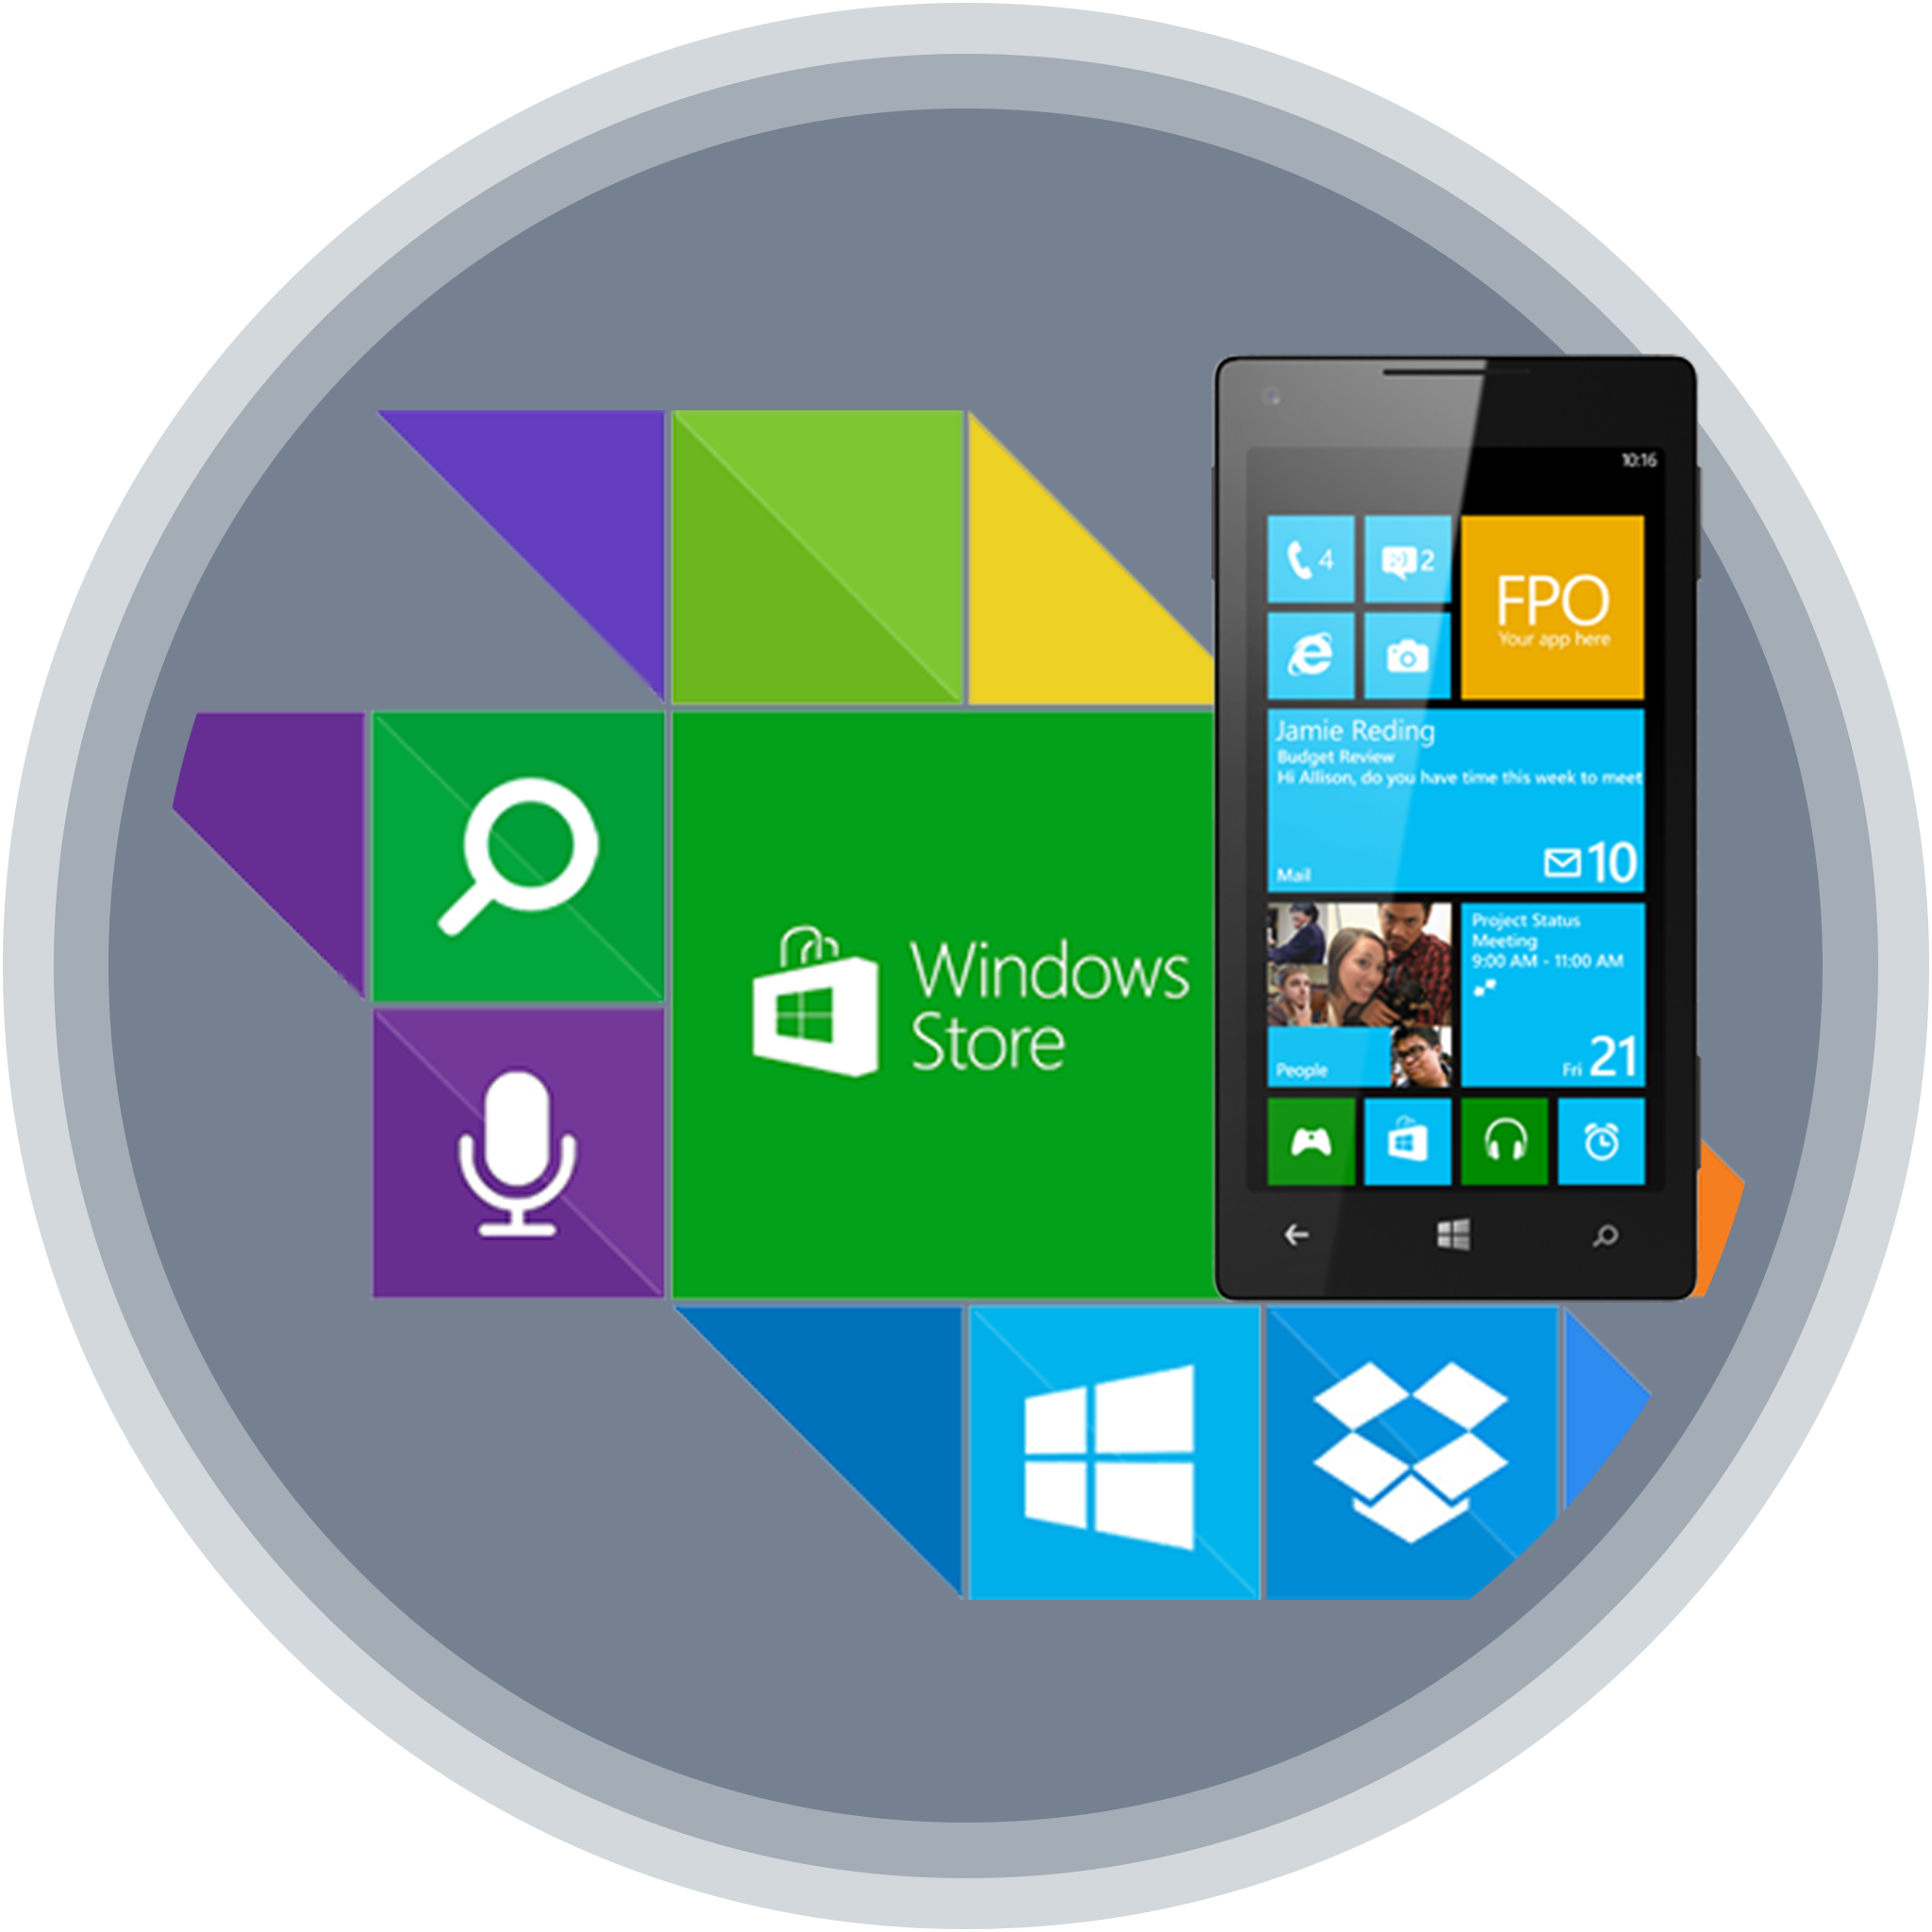 Windows Application Development